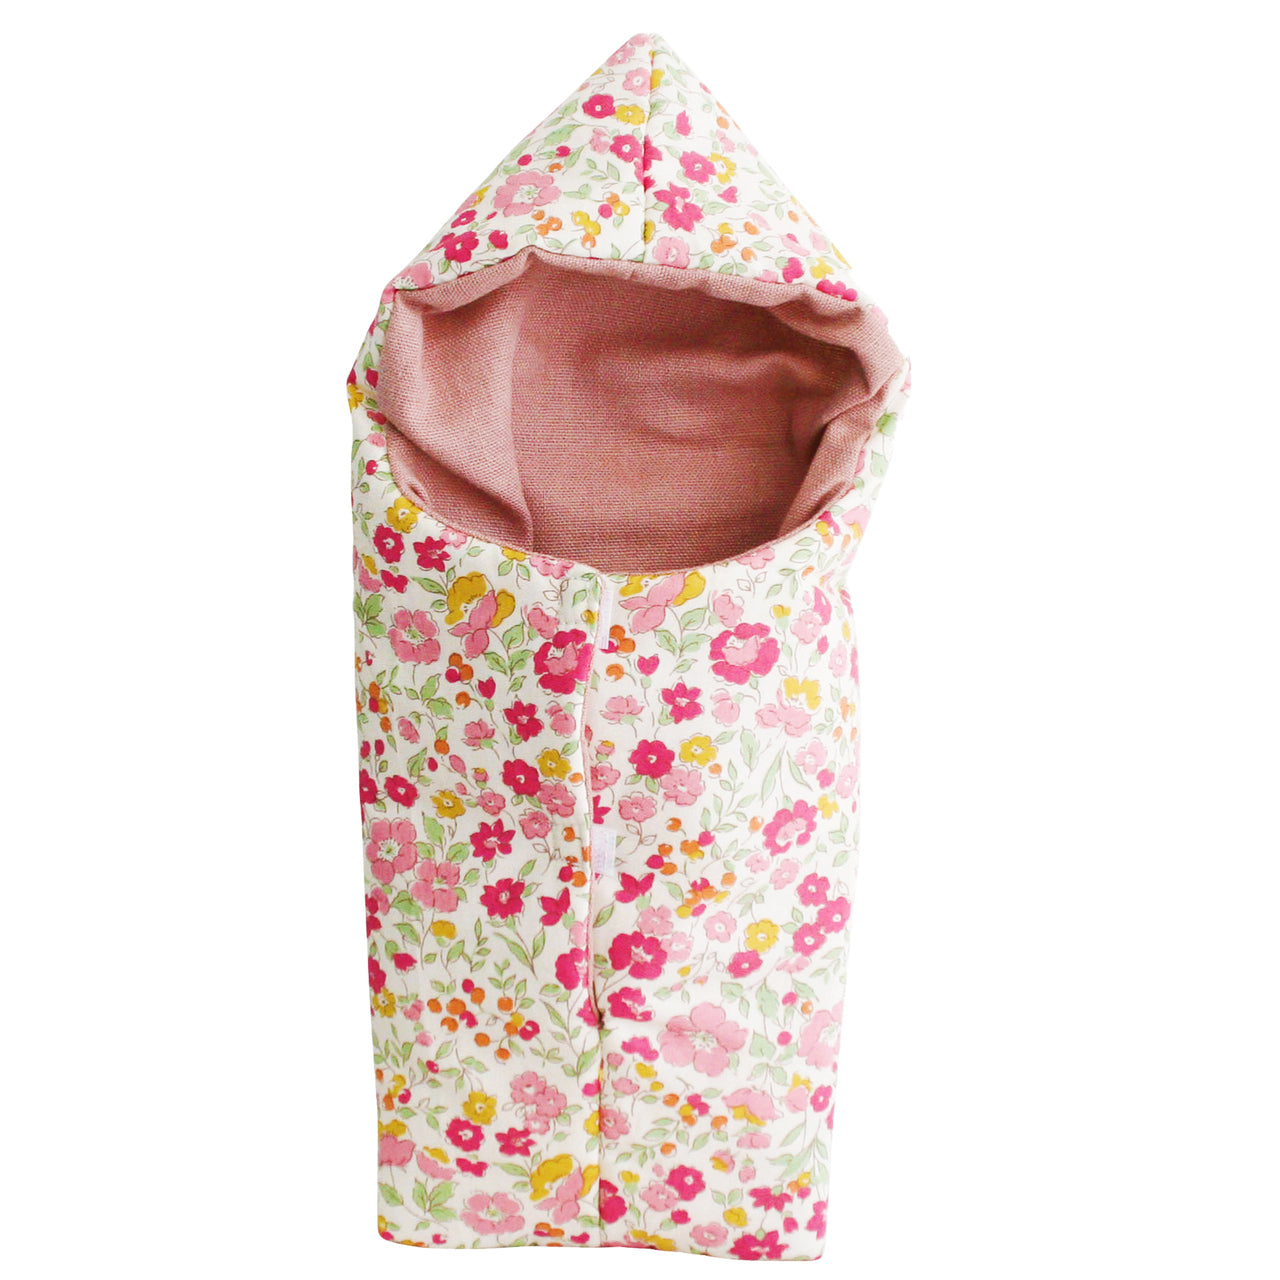 Alimrose - Mini Sleeping Bag 30cm - Rose Garden